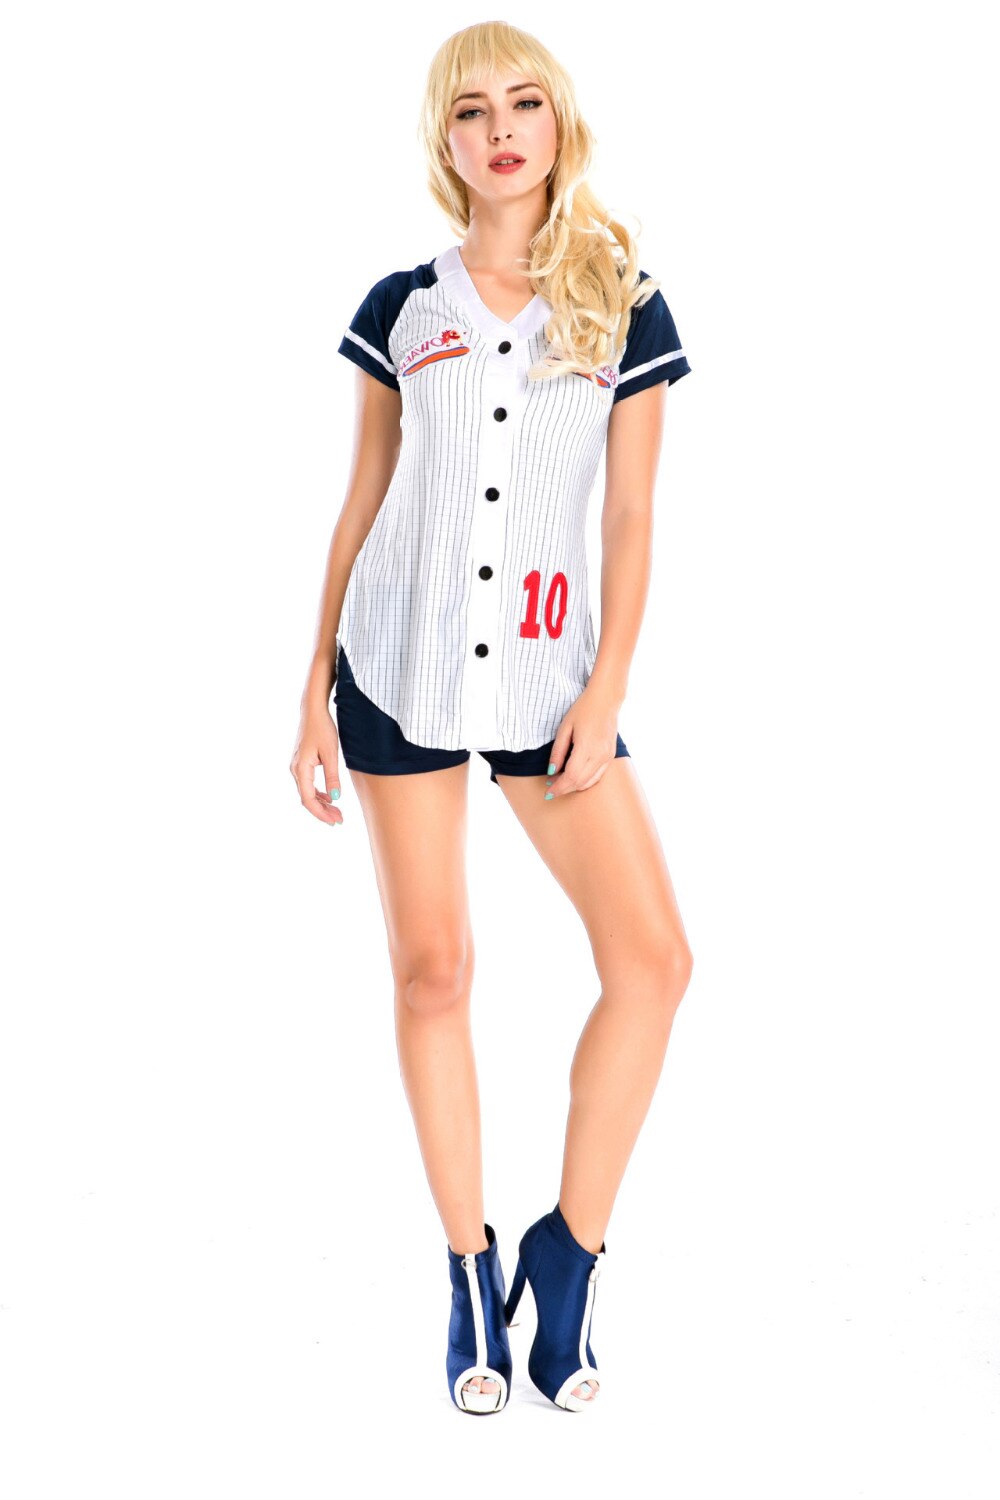 High Quality Sexy Baseball Cheerleader Costume High School Girl Cheerleading Uniform Cheer Fancy Dress